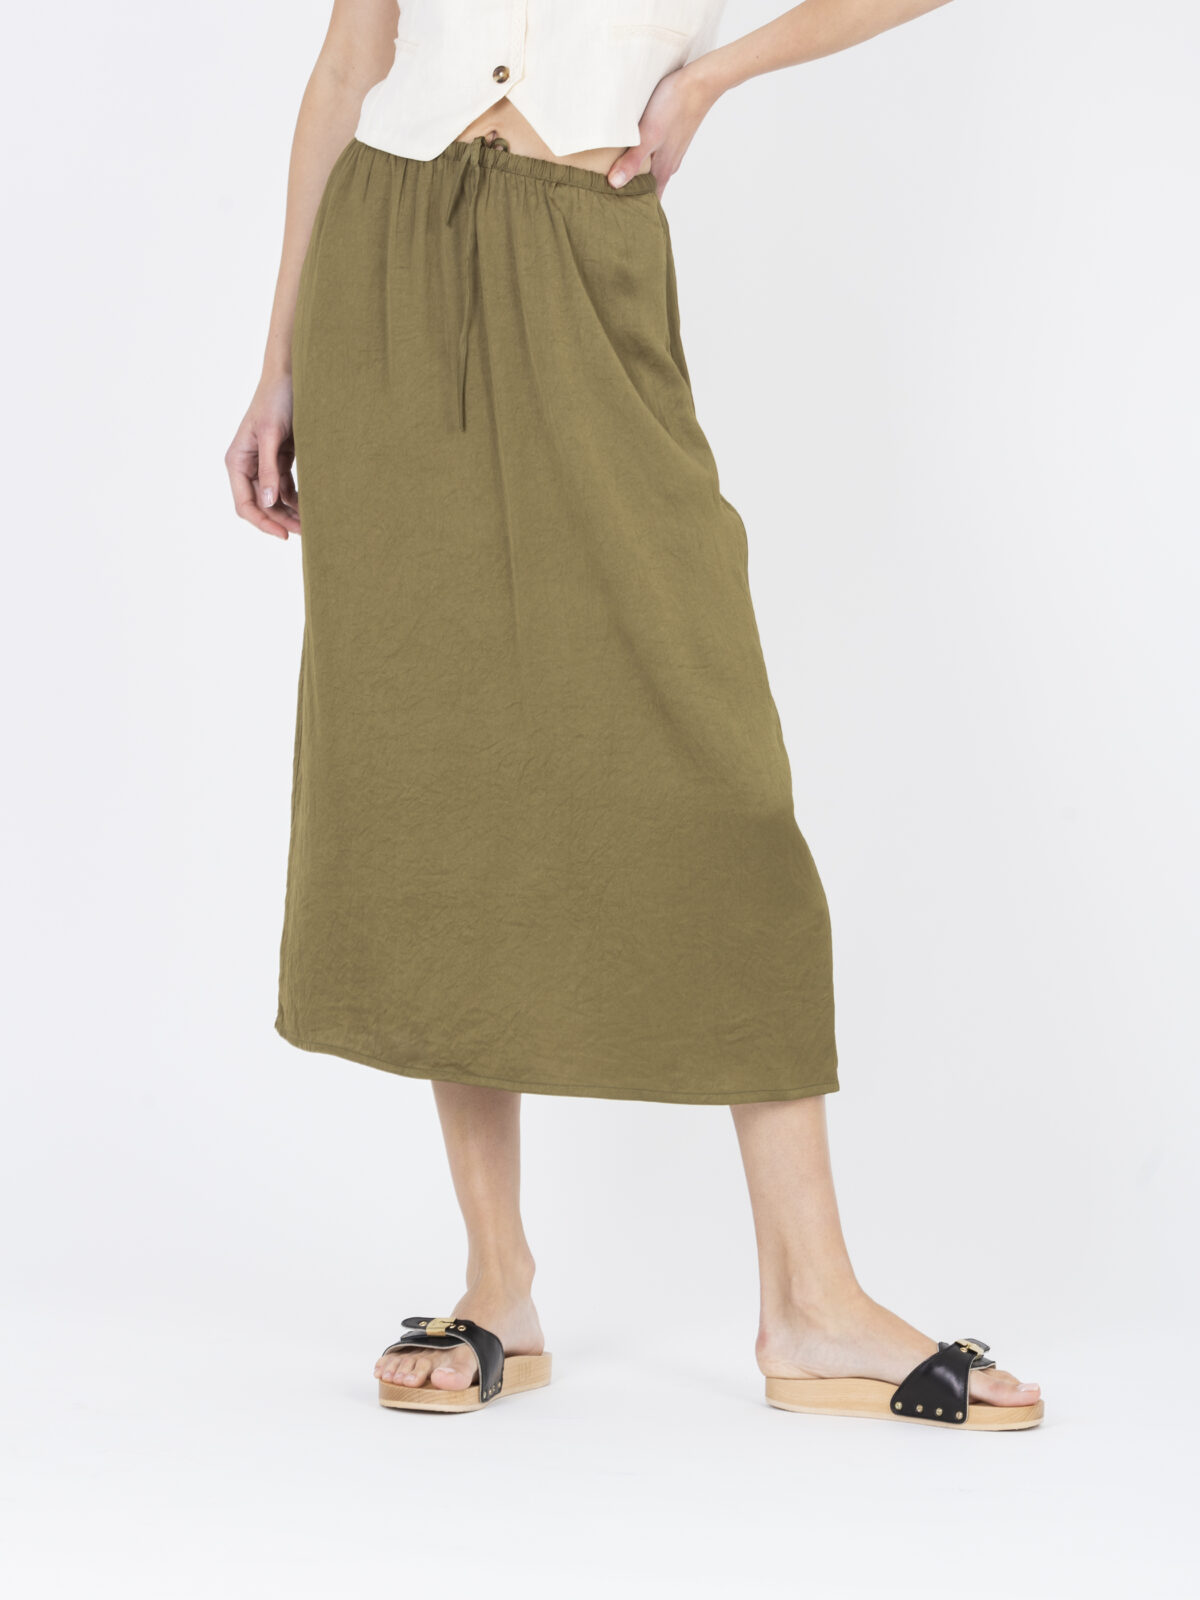 widland-thym-olive-satin-midi-skirt-wrap-elastic-waist-american-vintage-matchboxathens